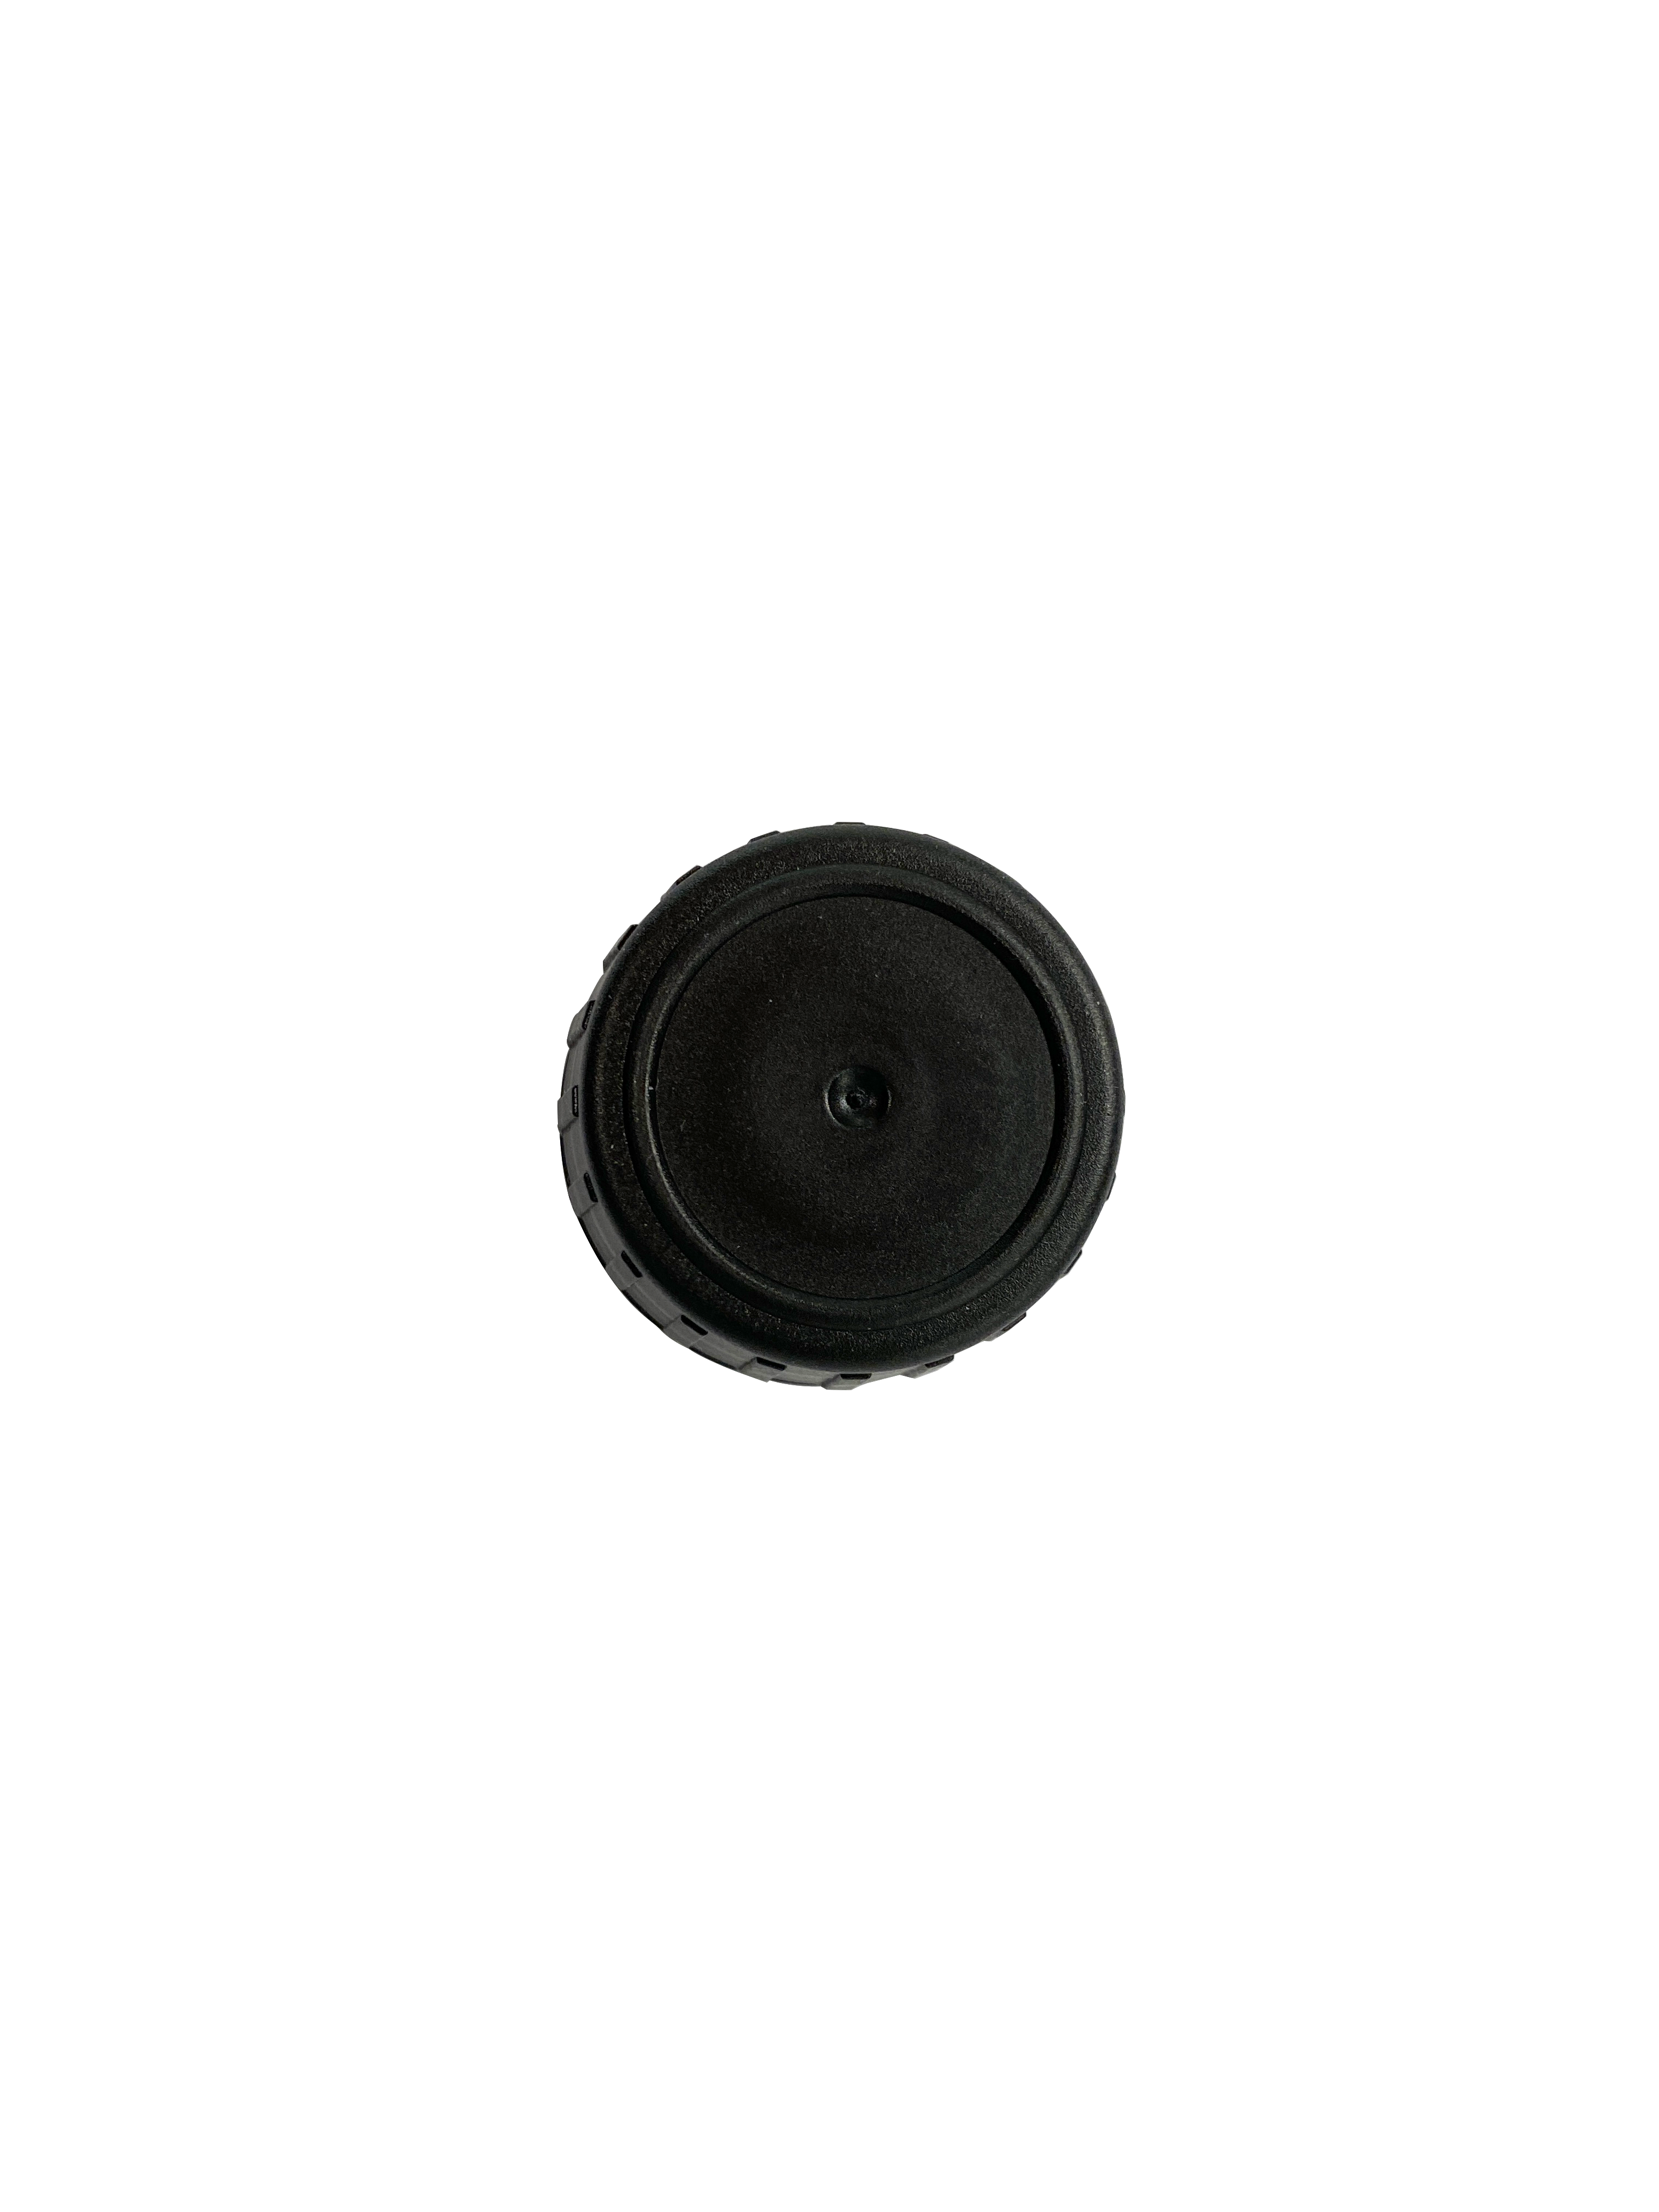 Screw cap tamper evident PP28, III, PP, black, ribbed, natural pourer PELD (Thyme)